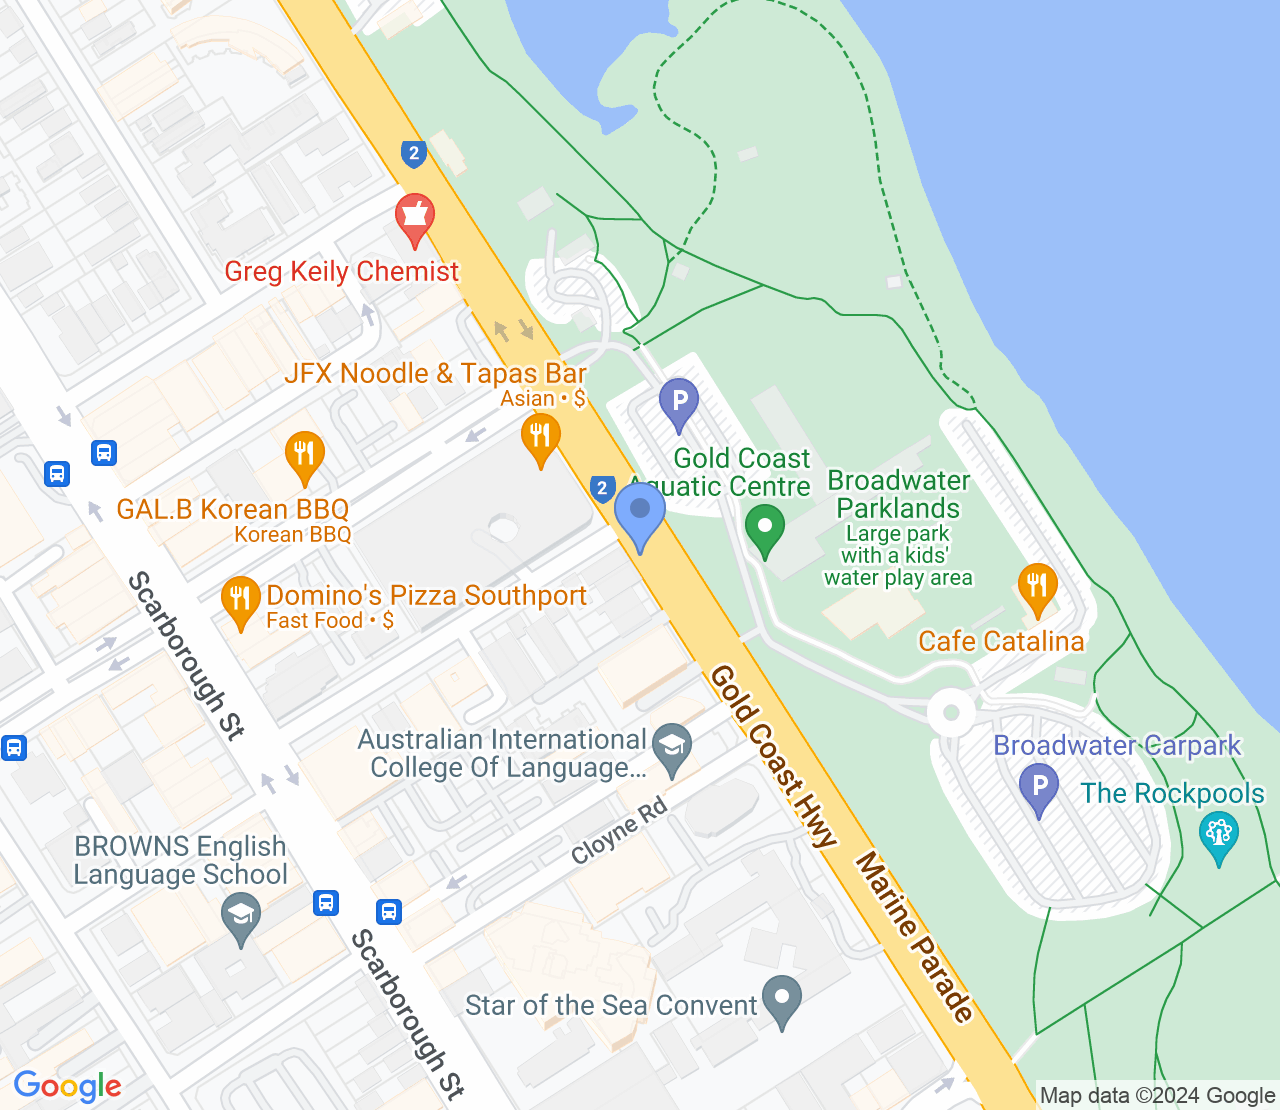 Google Maps image of Gold Coast Aquatic Centre